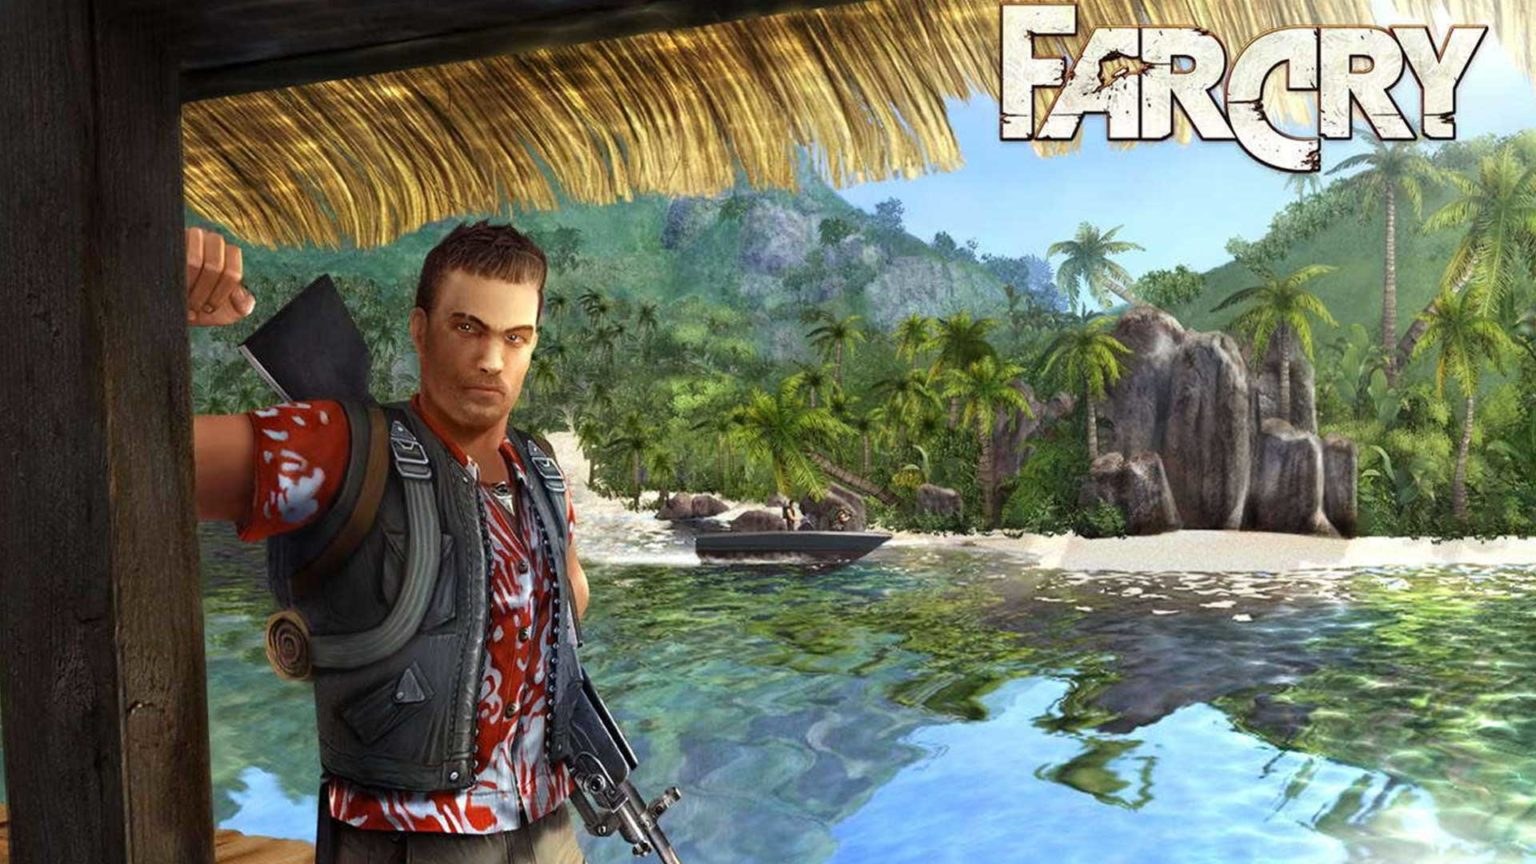 Far cry первая игра